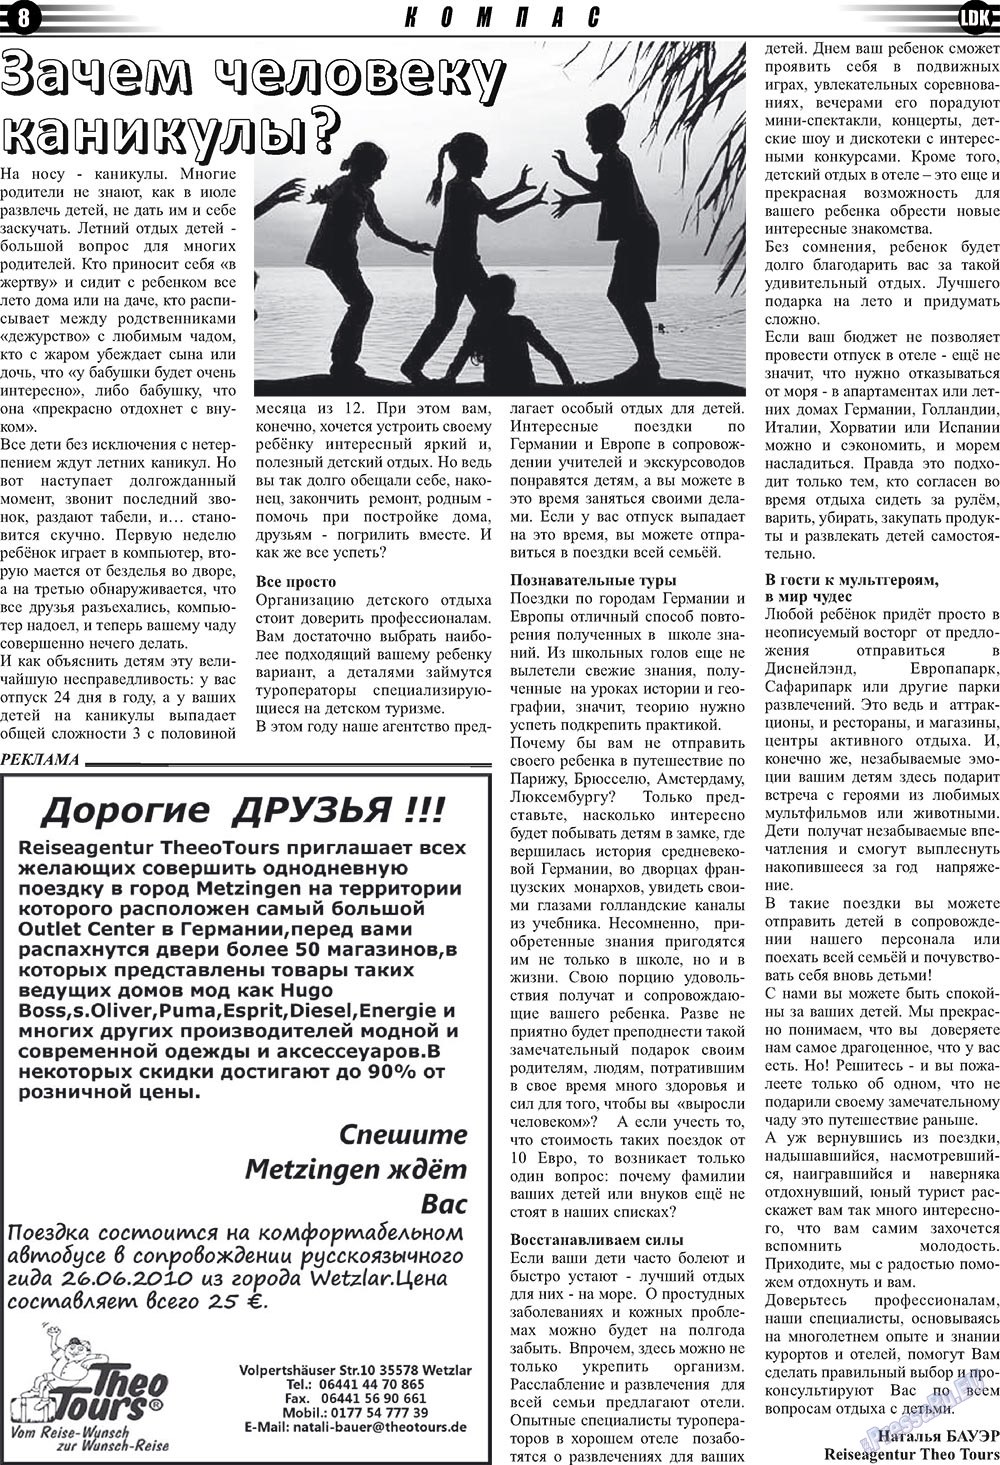 LDK по-русски, газета. 2010 №6 стр.8